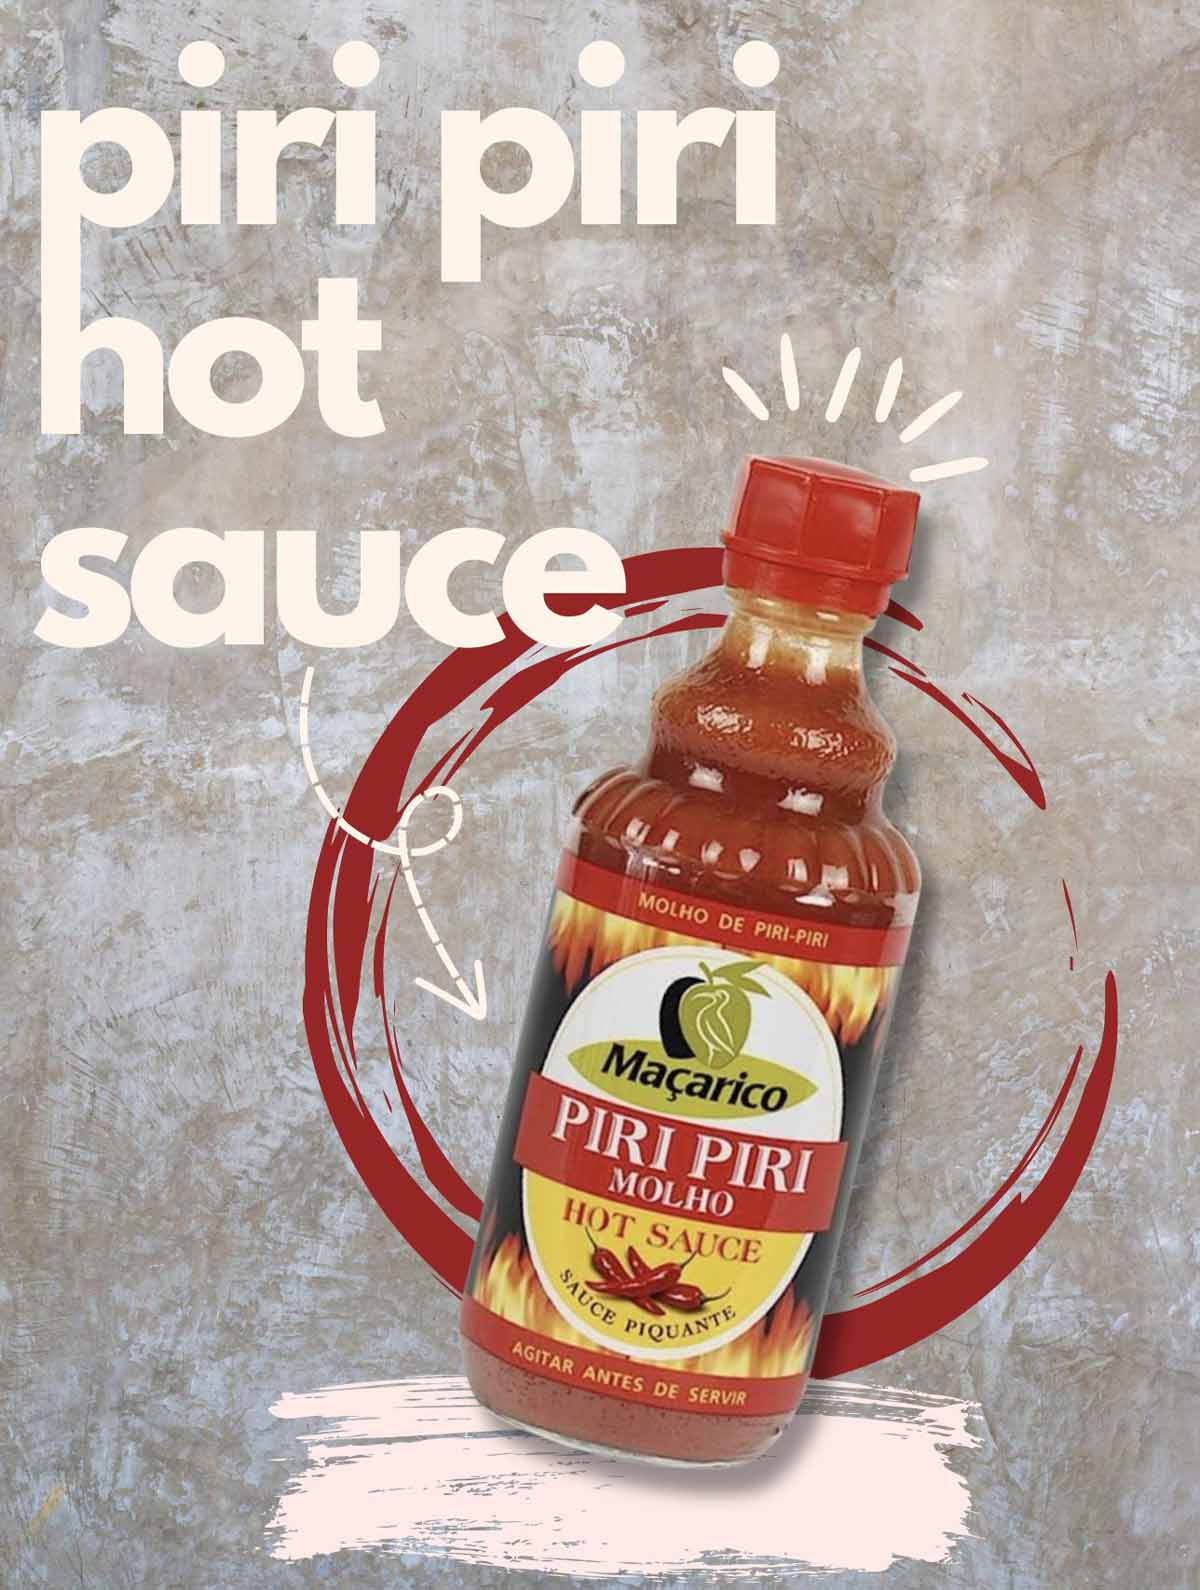 Bottle of Piri Piri Sauce, a spicy Chili Garlic Sauce substitute